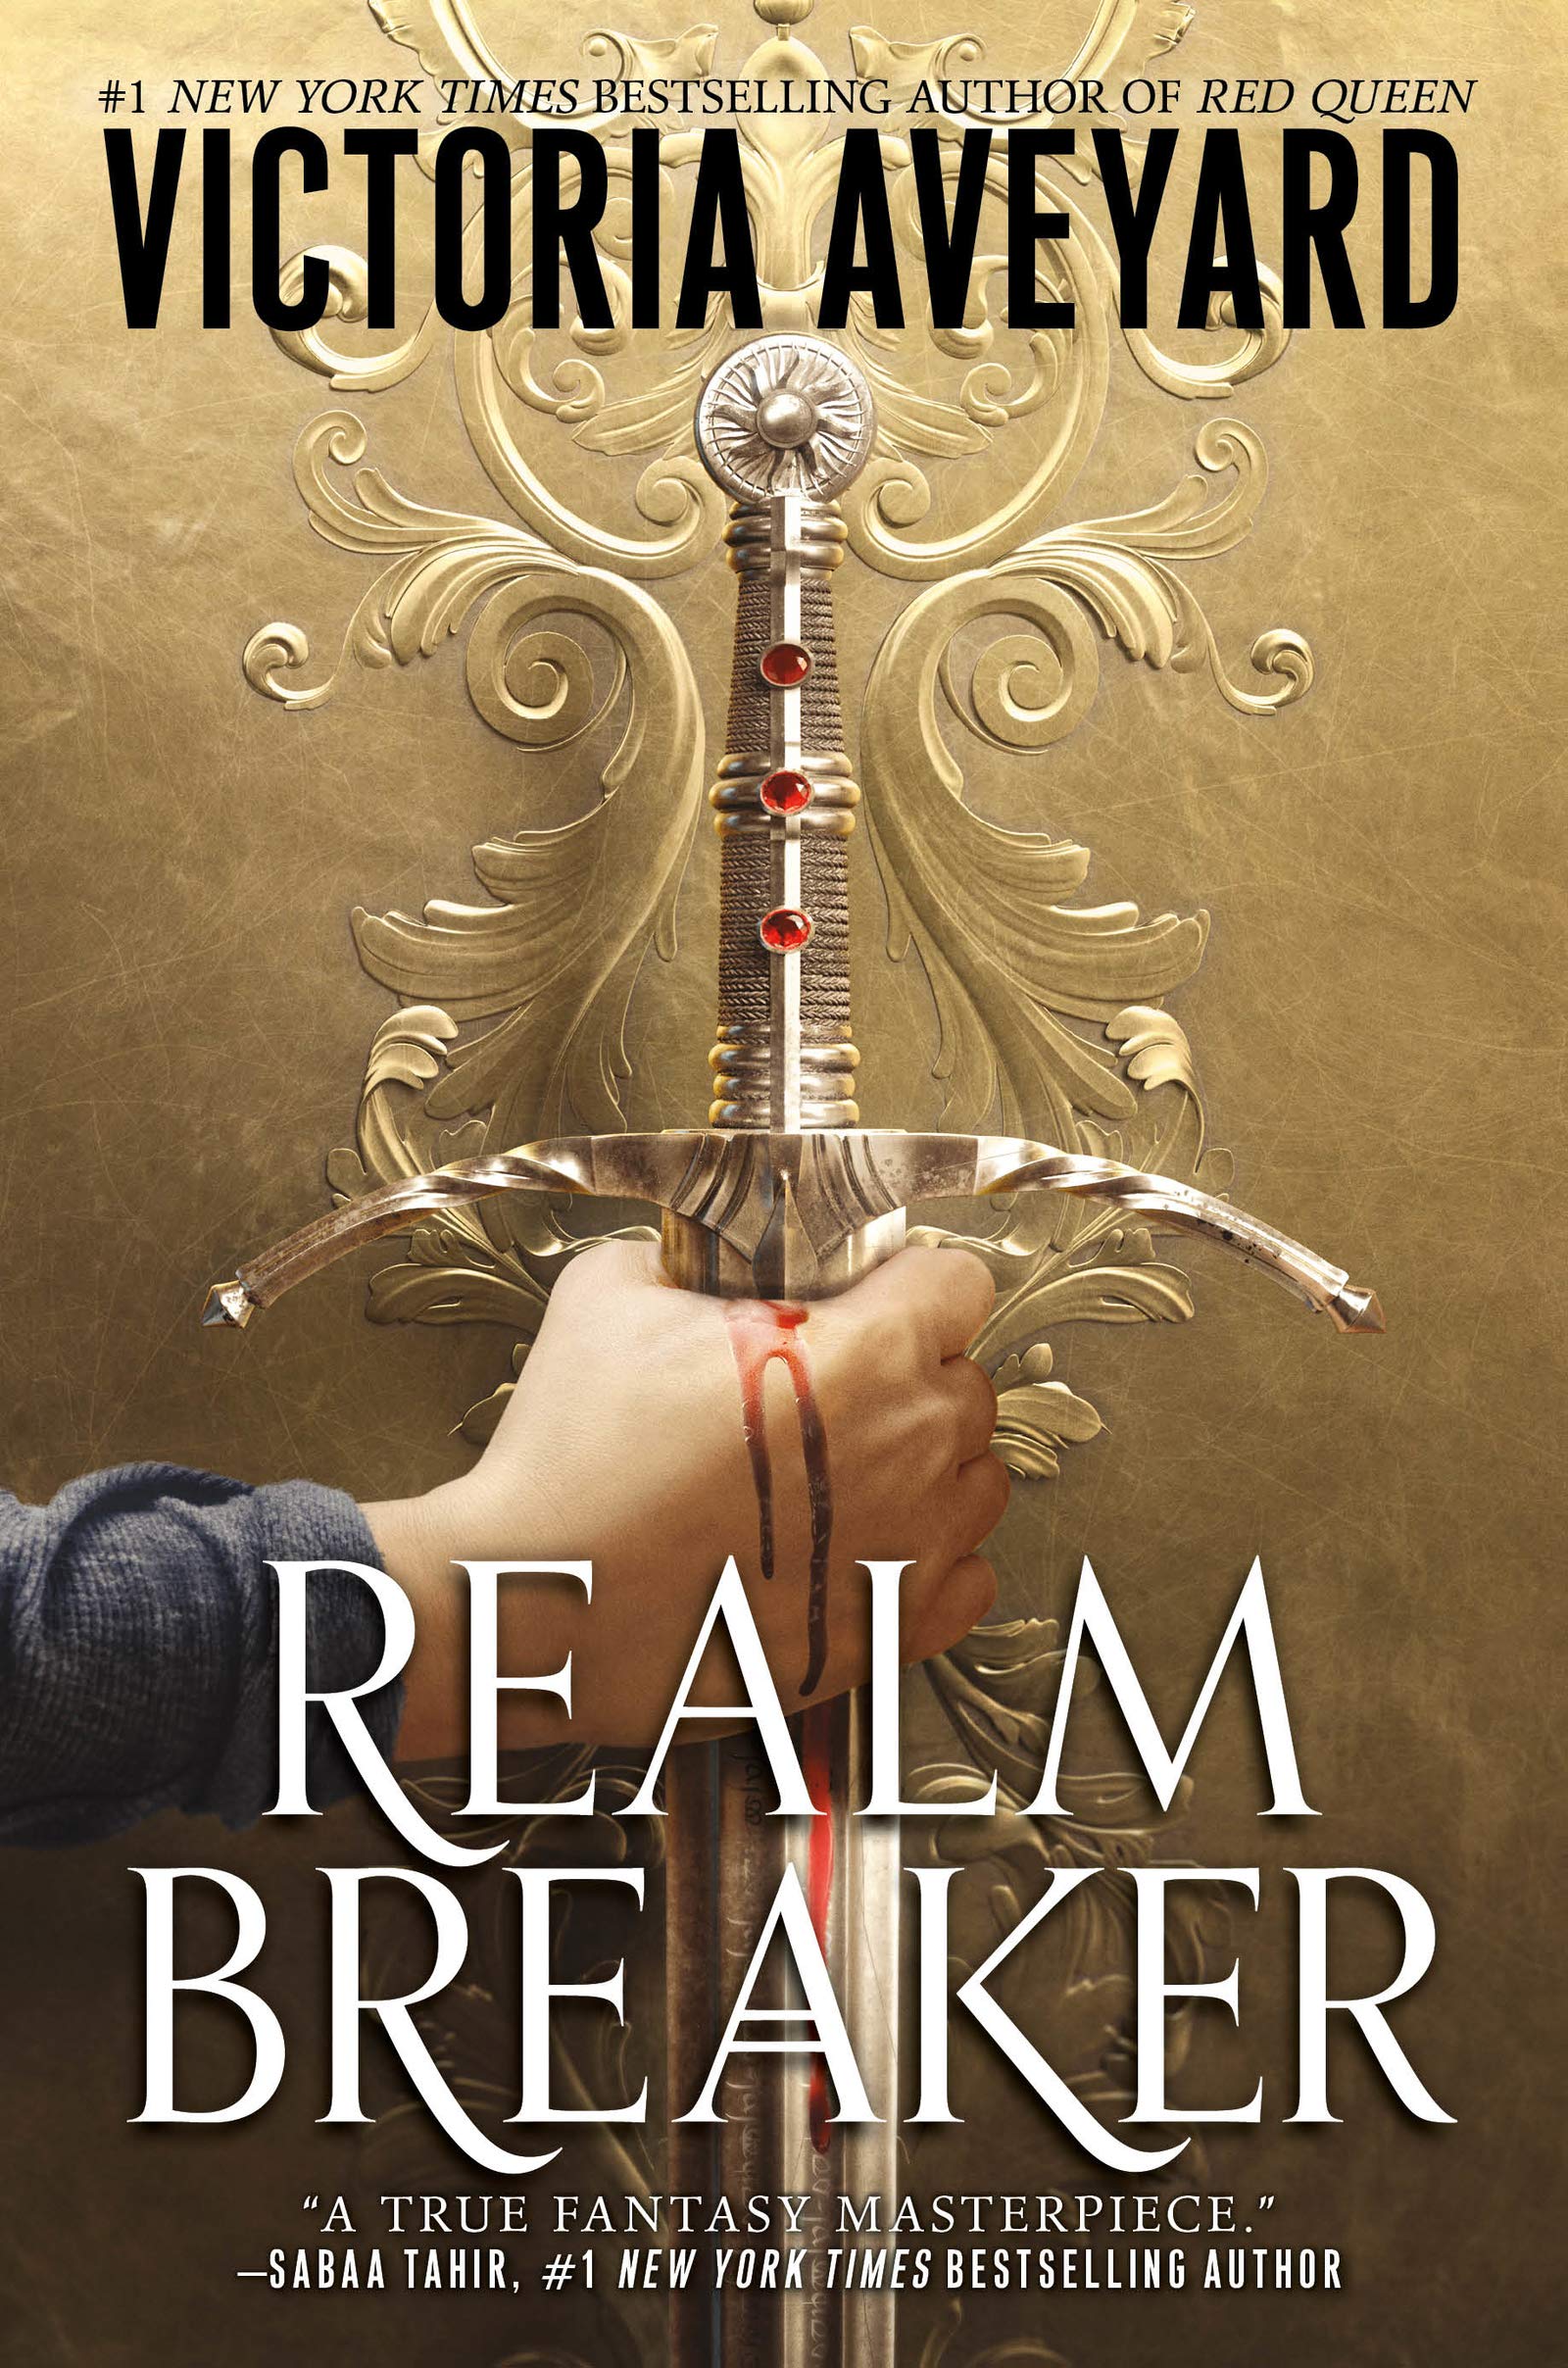 Image for "Realm Breaker"